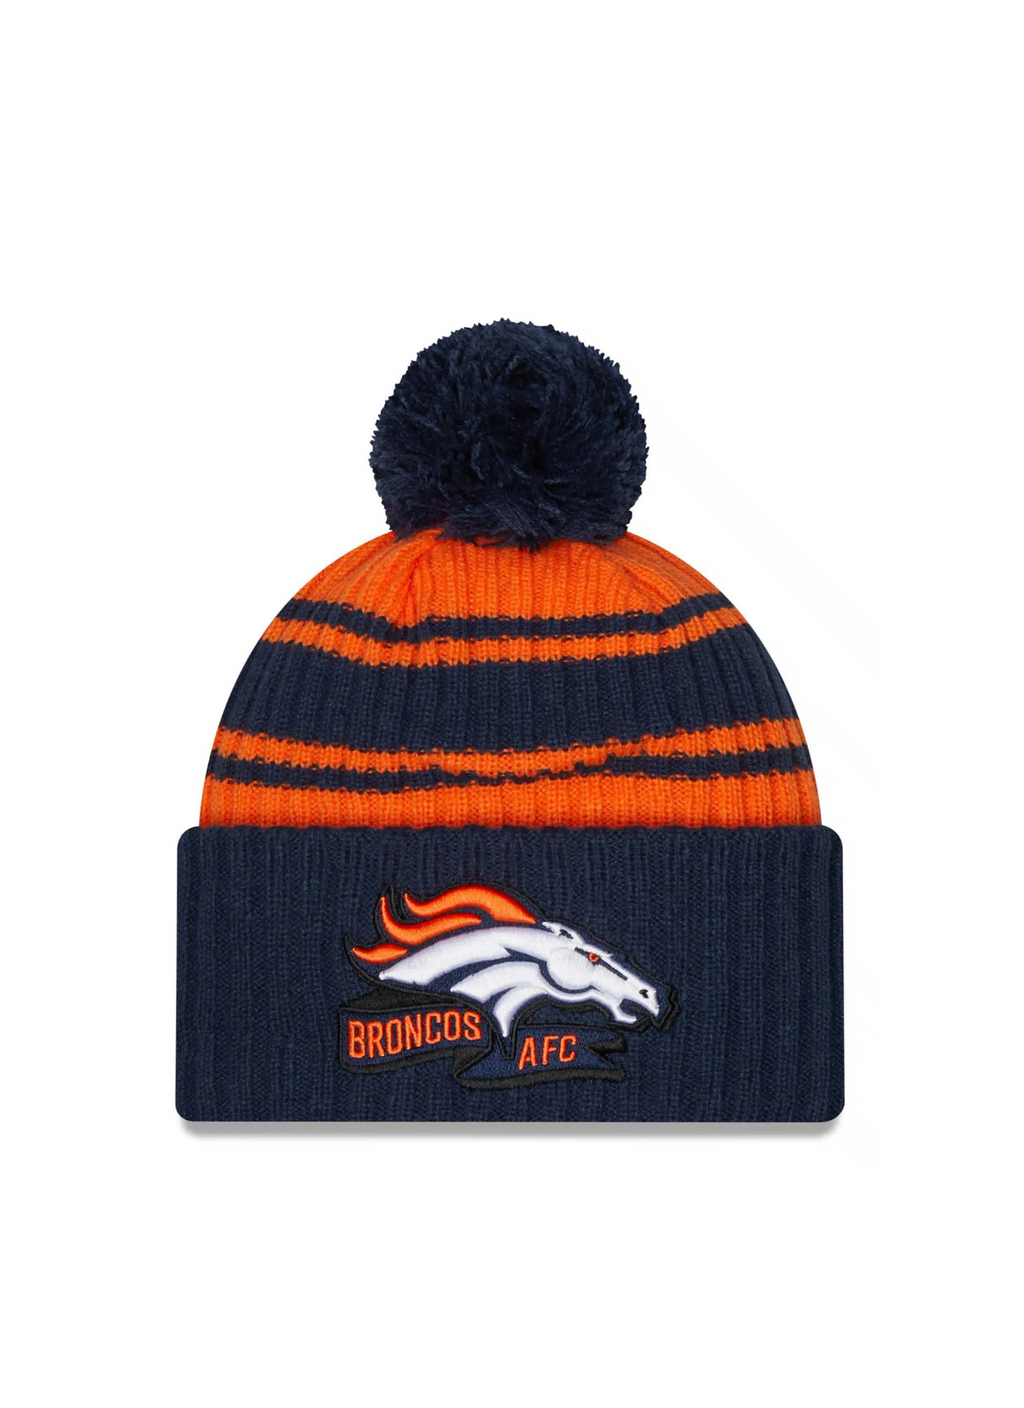 New Era NFL Denver Broncos Knit Beanie Blue Orange